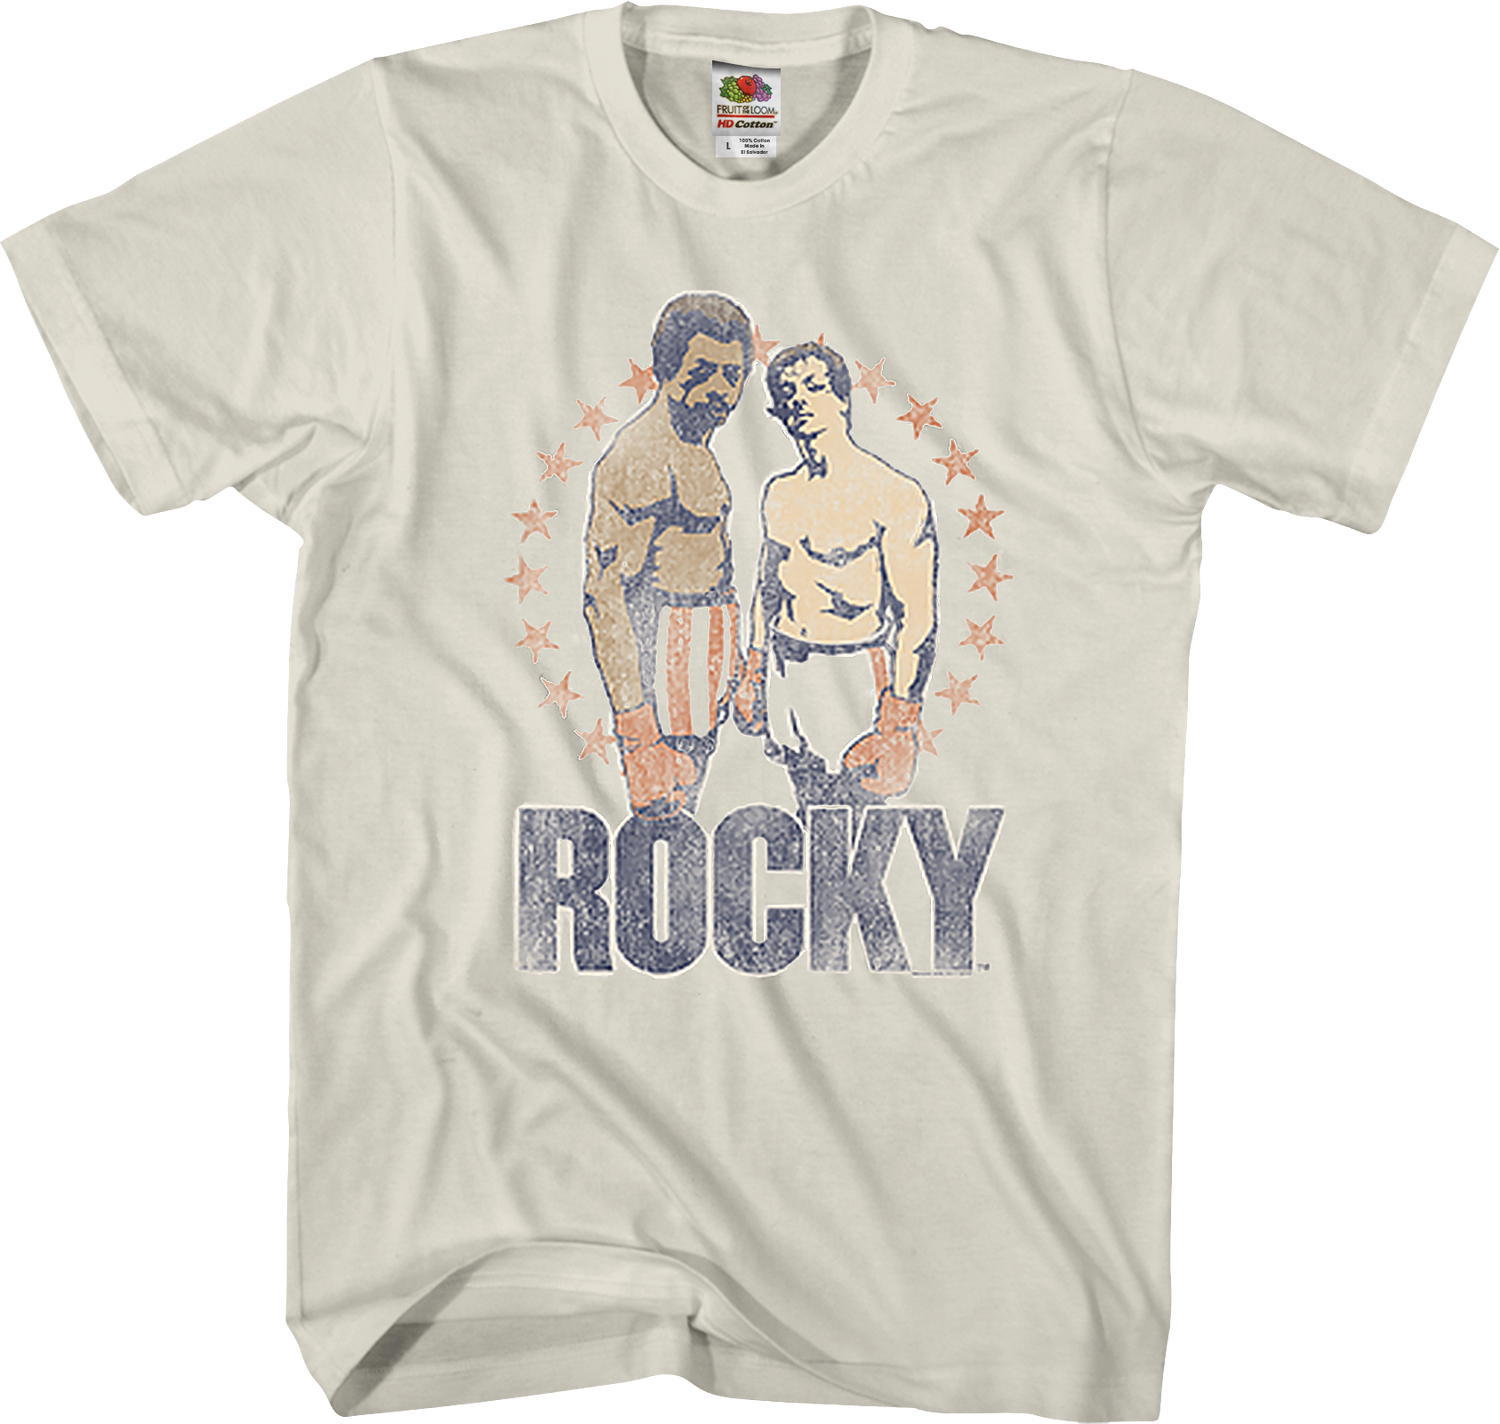 Apollo Creed and Rocky Balboa T-Shirt. Men's T-Shirt